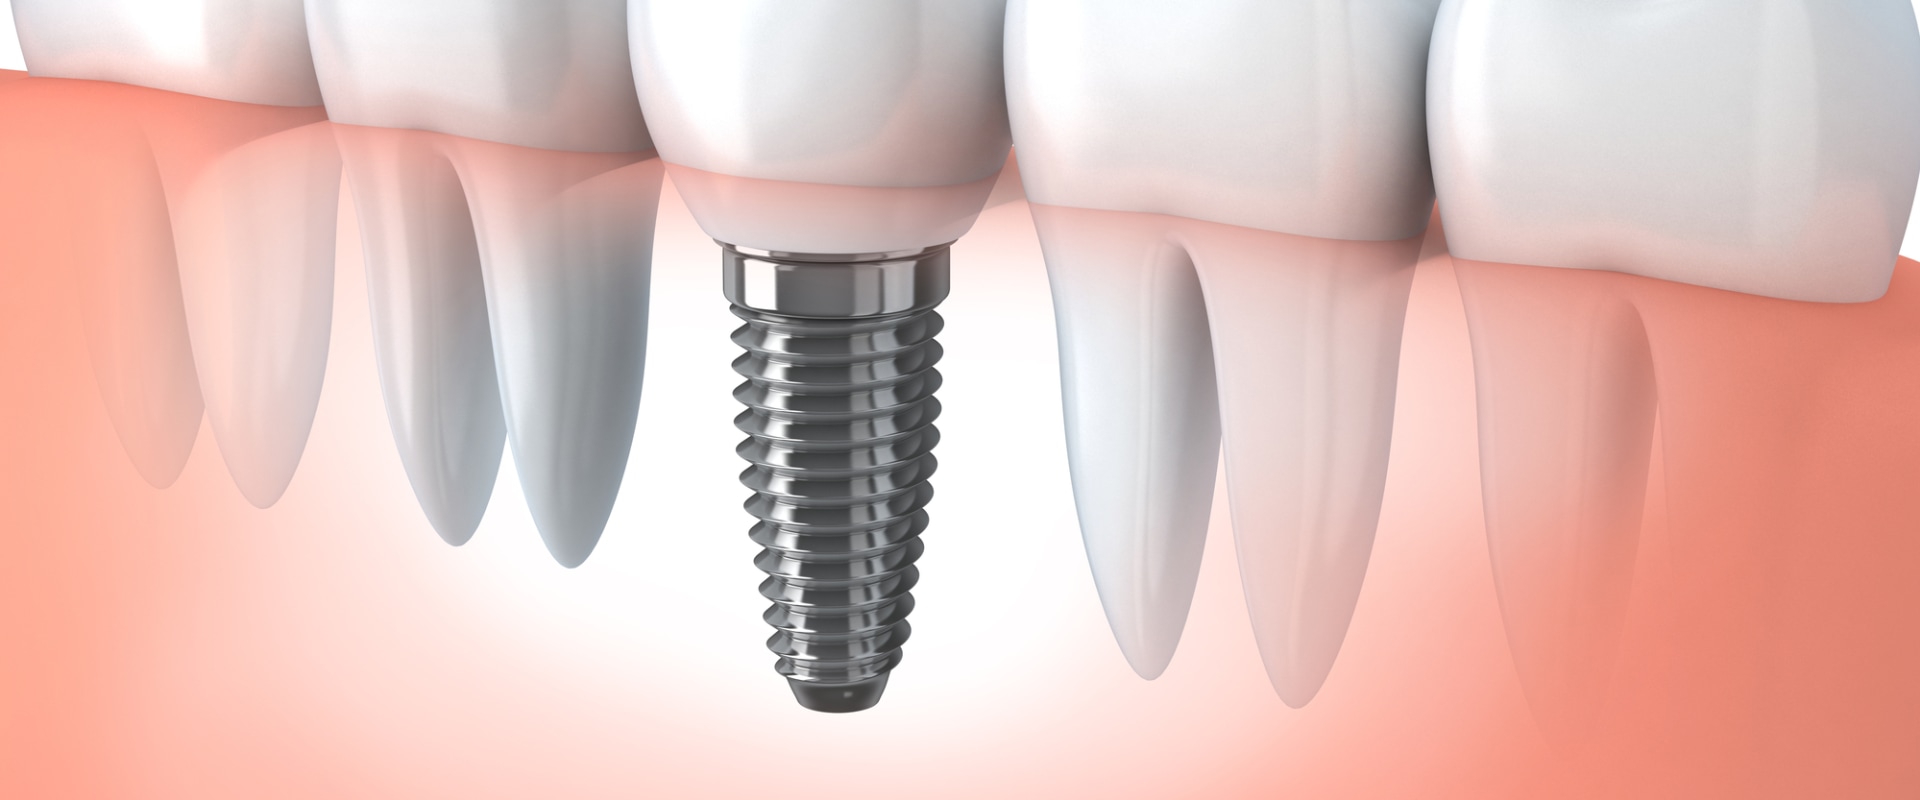 Understanding the Risks of Dental Implants